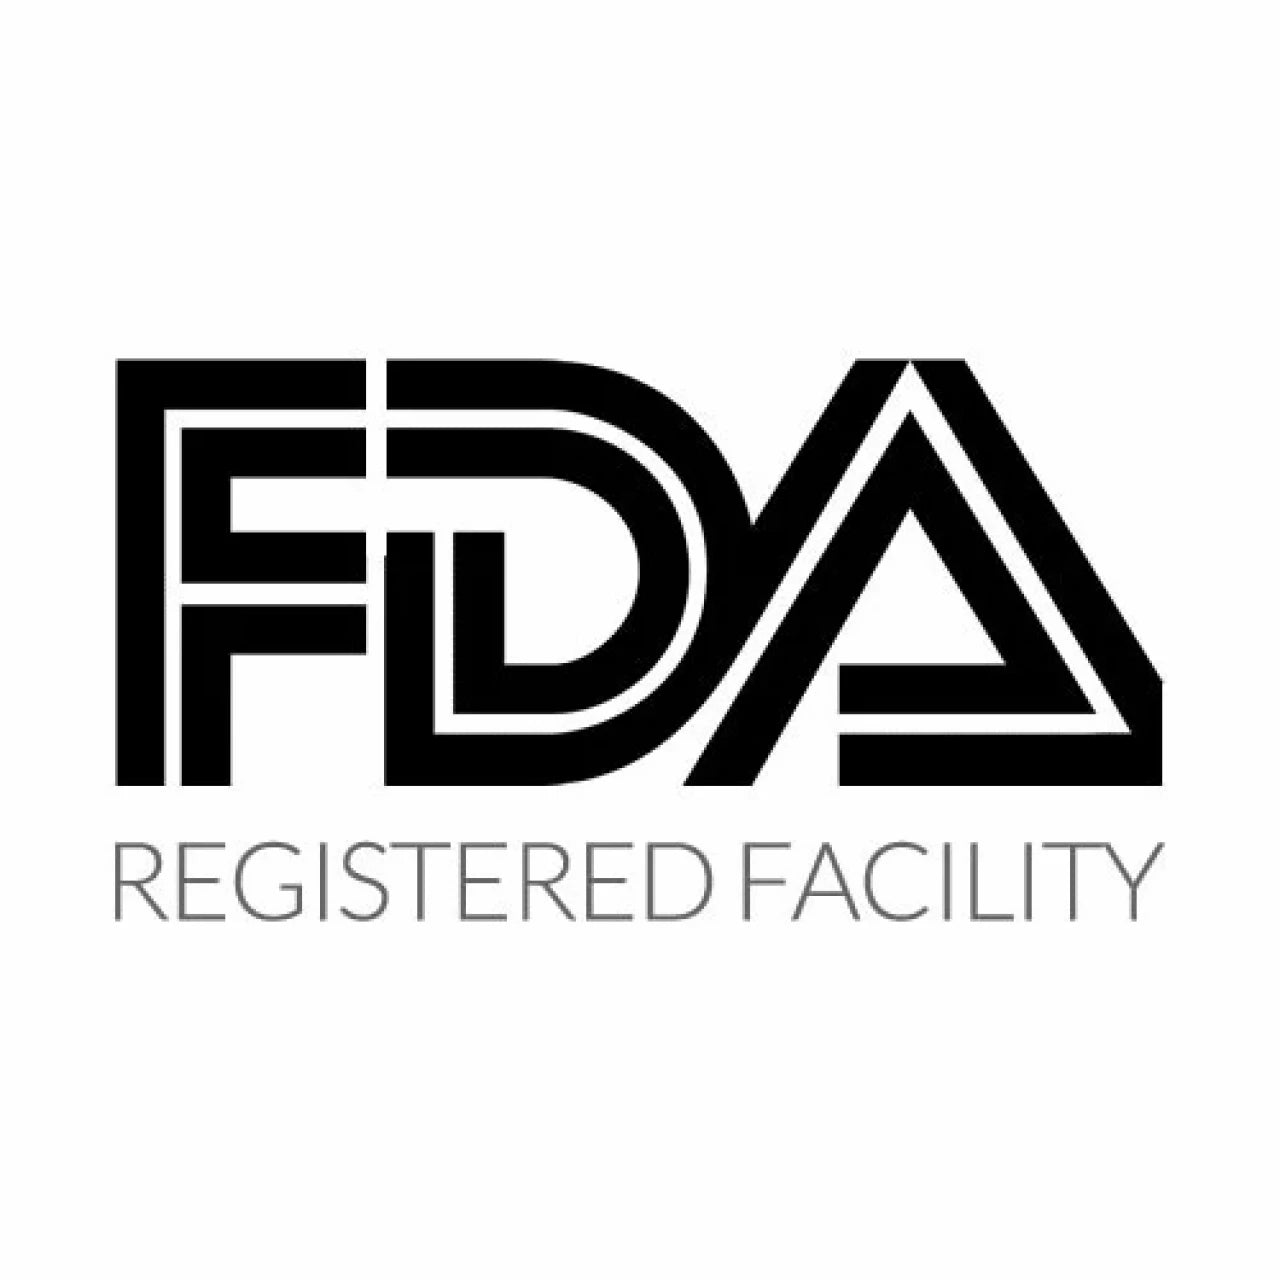 Black and white FDA Registered Facility logo.